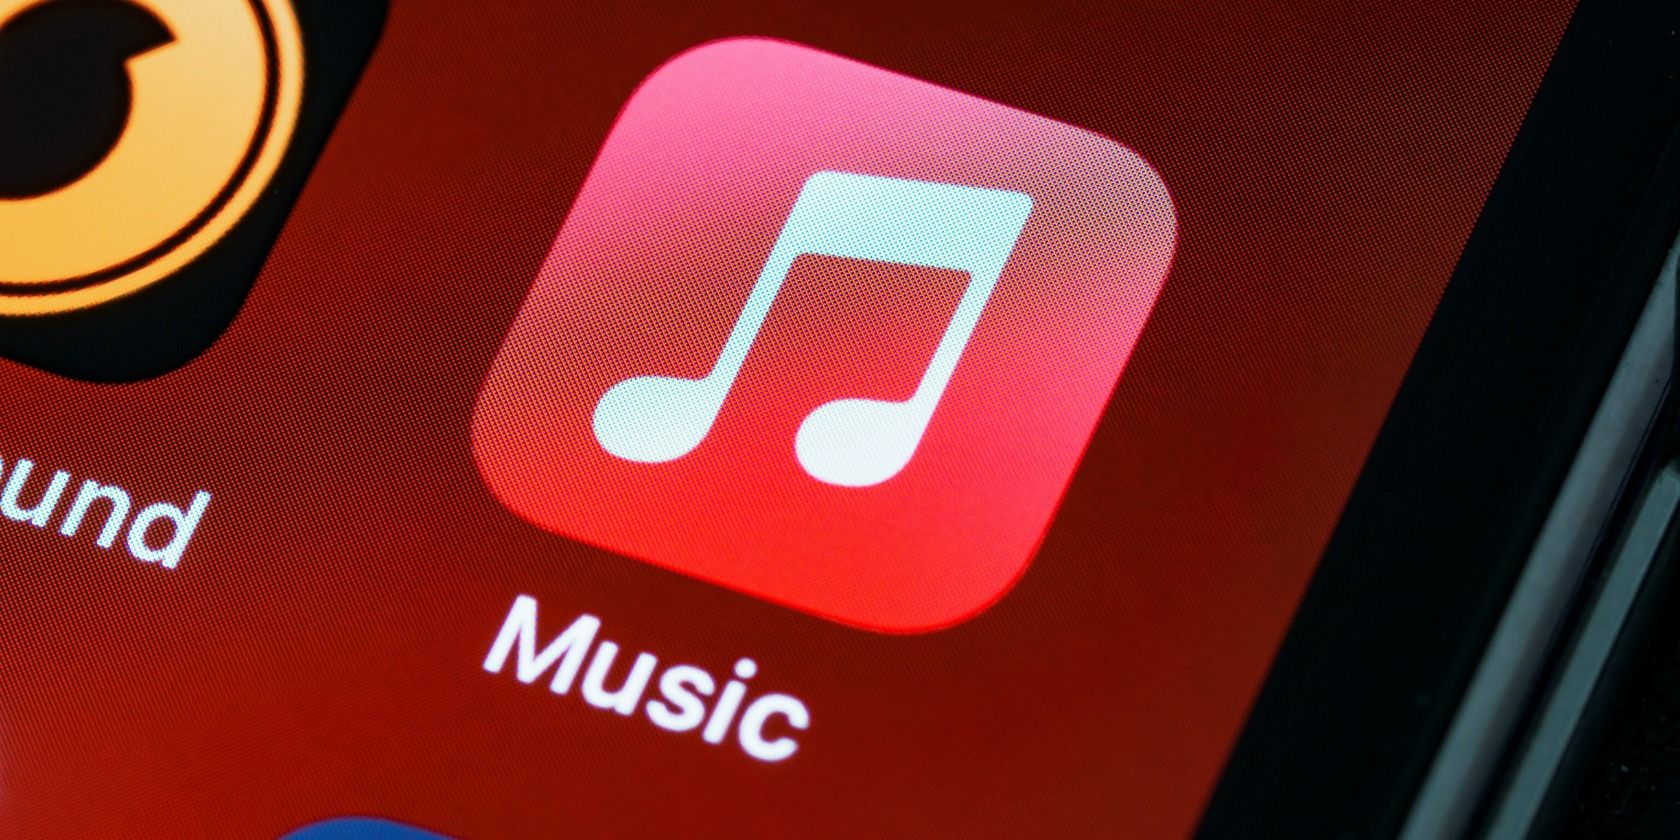 Apple Music icon on iPhone screen